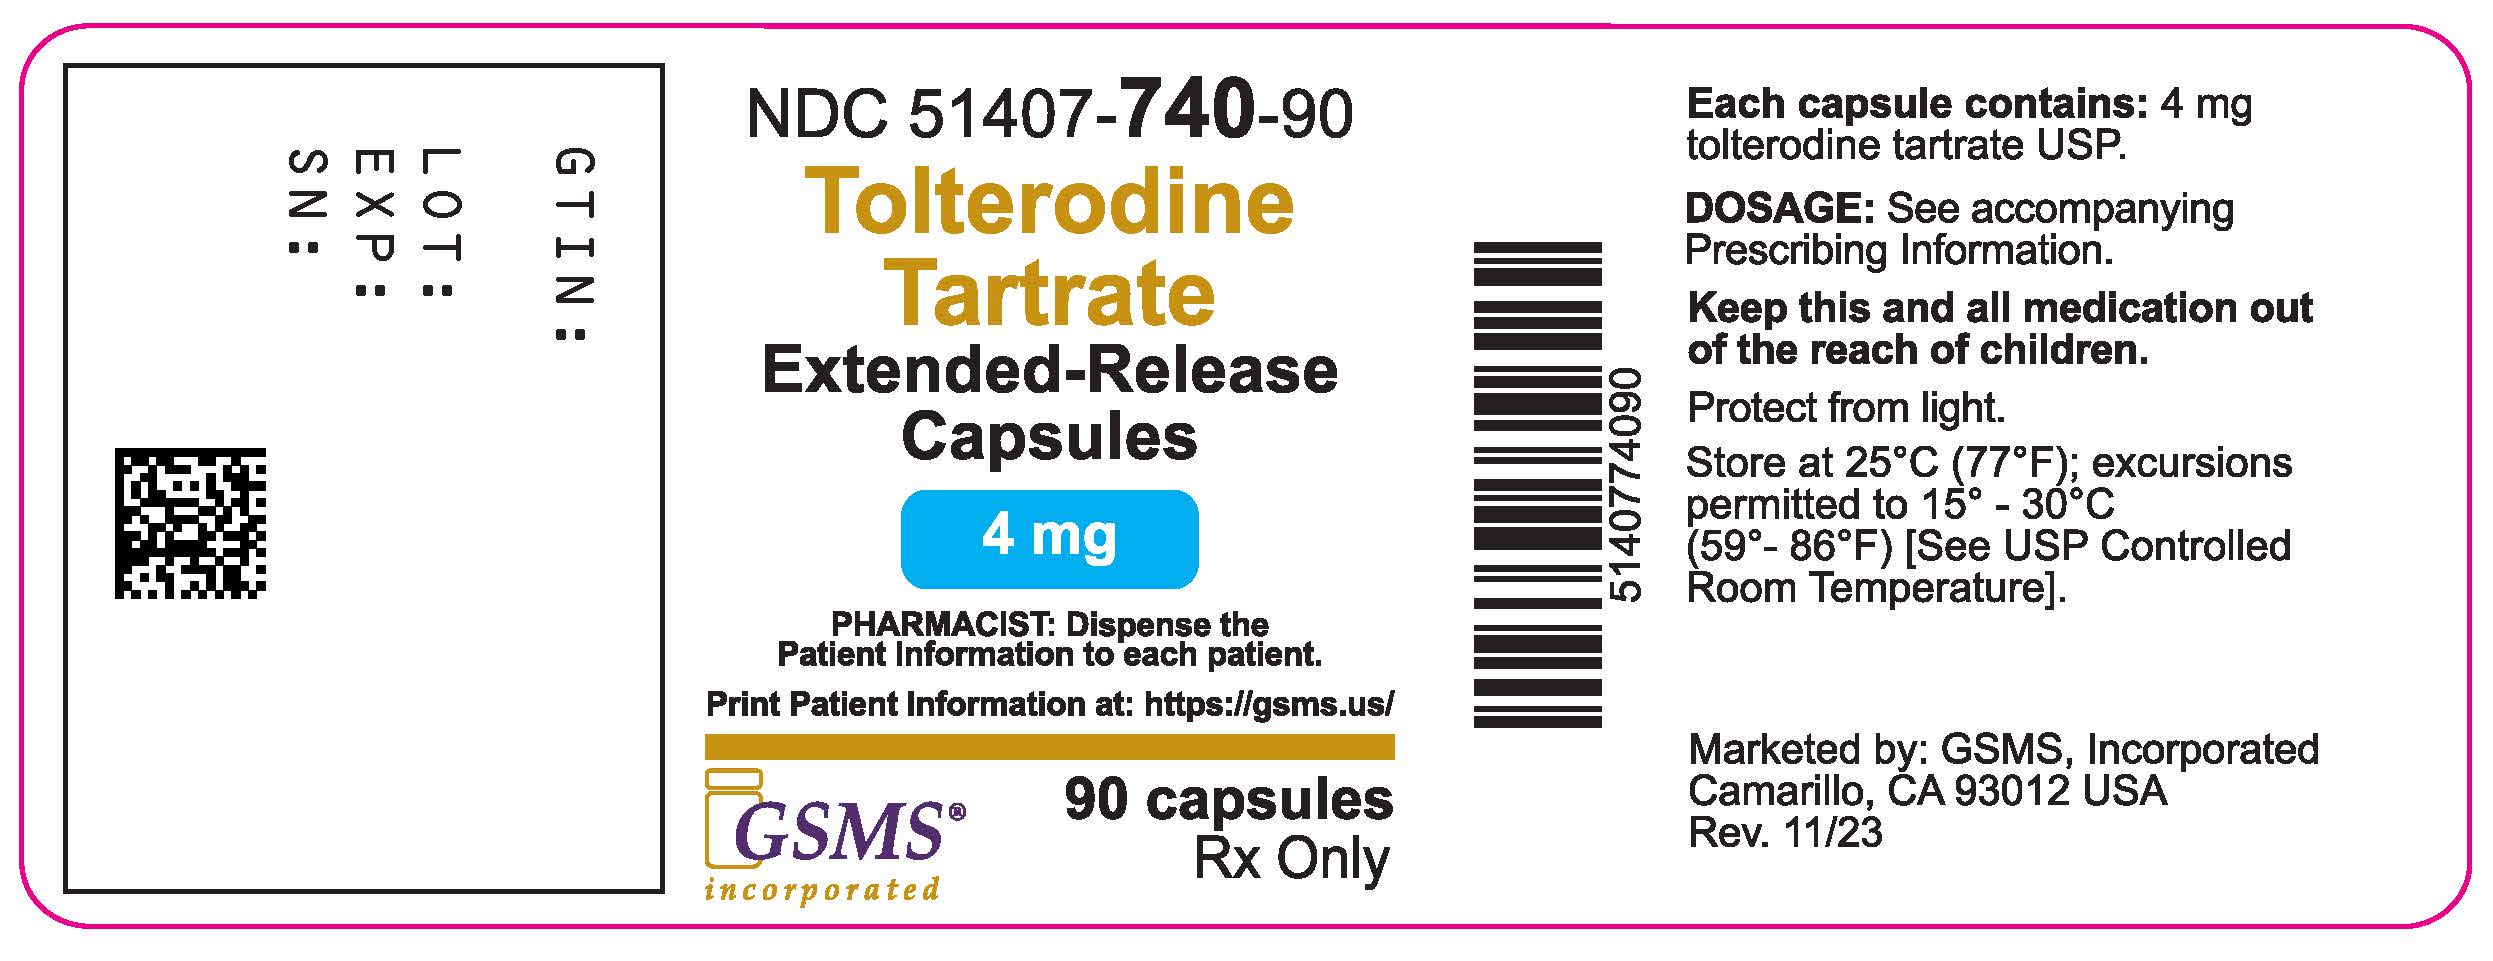 51407-740-90LB - Tolterodine Tartrate ER Capsules - ANI - Rev. 1123.jpg